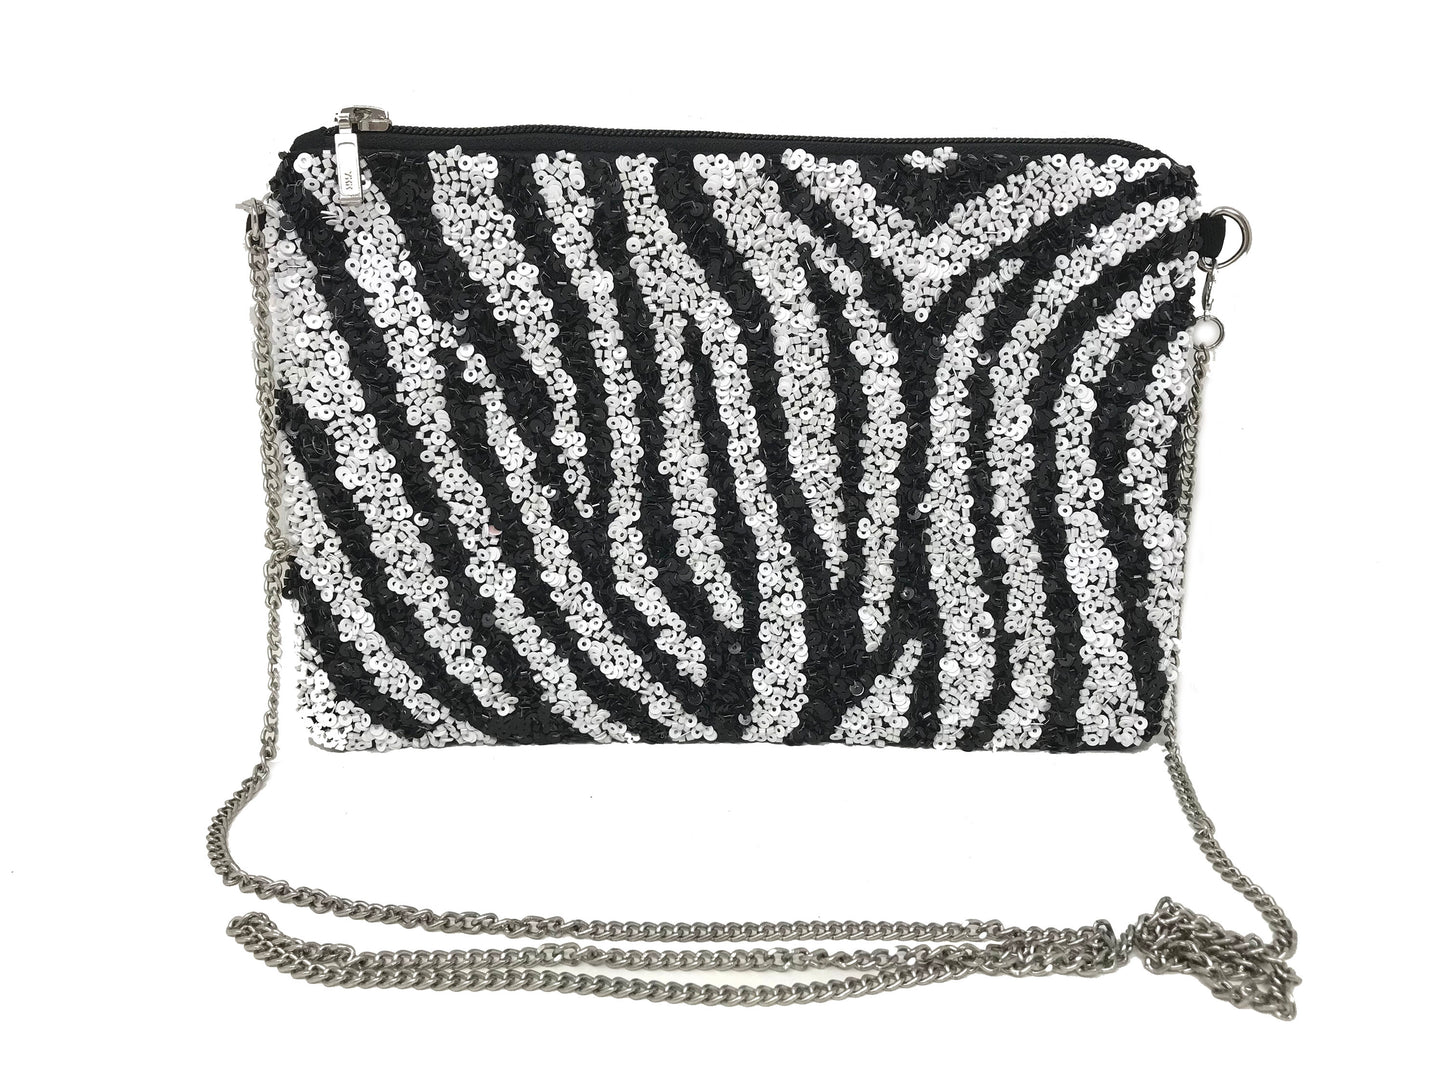 Kay Lee New York Animal Print Beaded Evening Handbag with Chain Strap | More Styles Inside